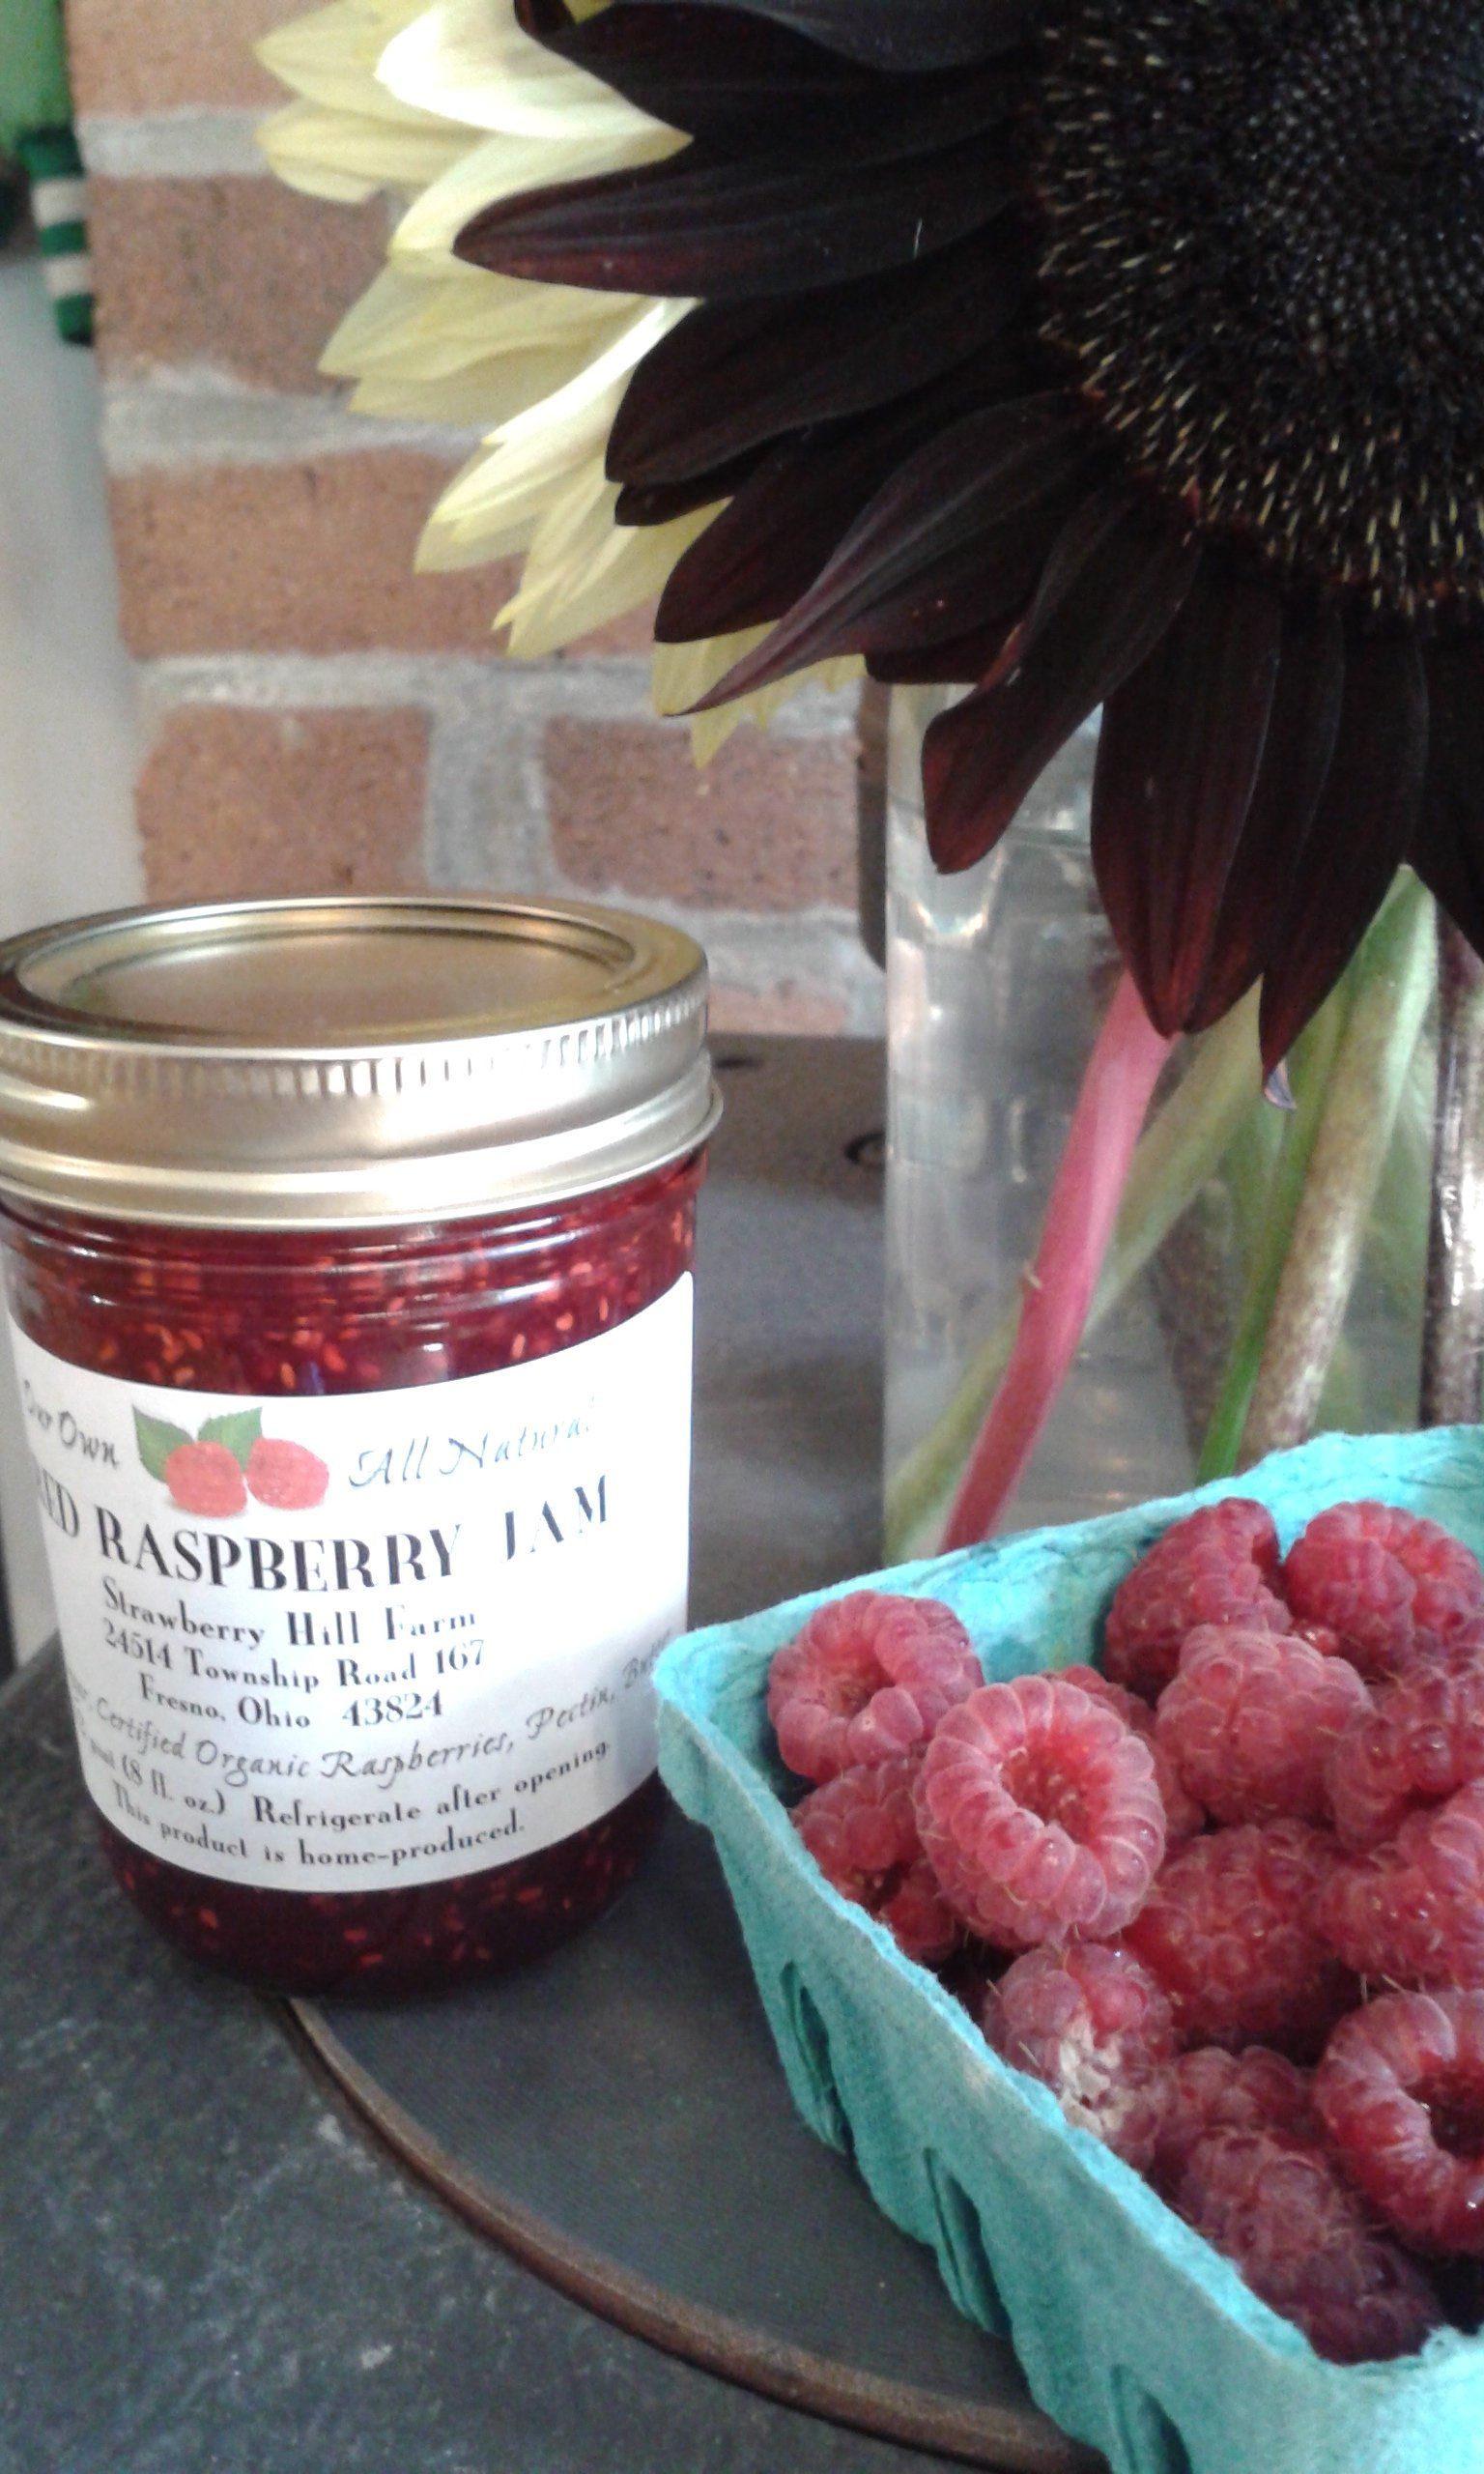 Previous Happening: Raspberry Jam Is in Stock!